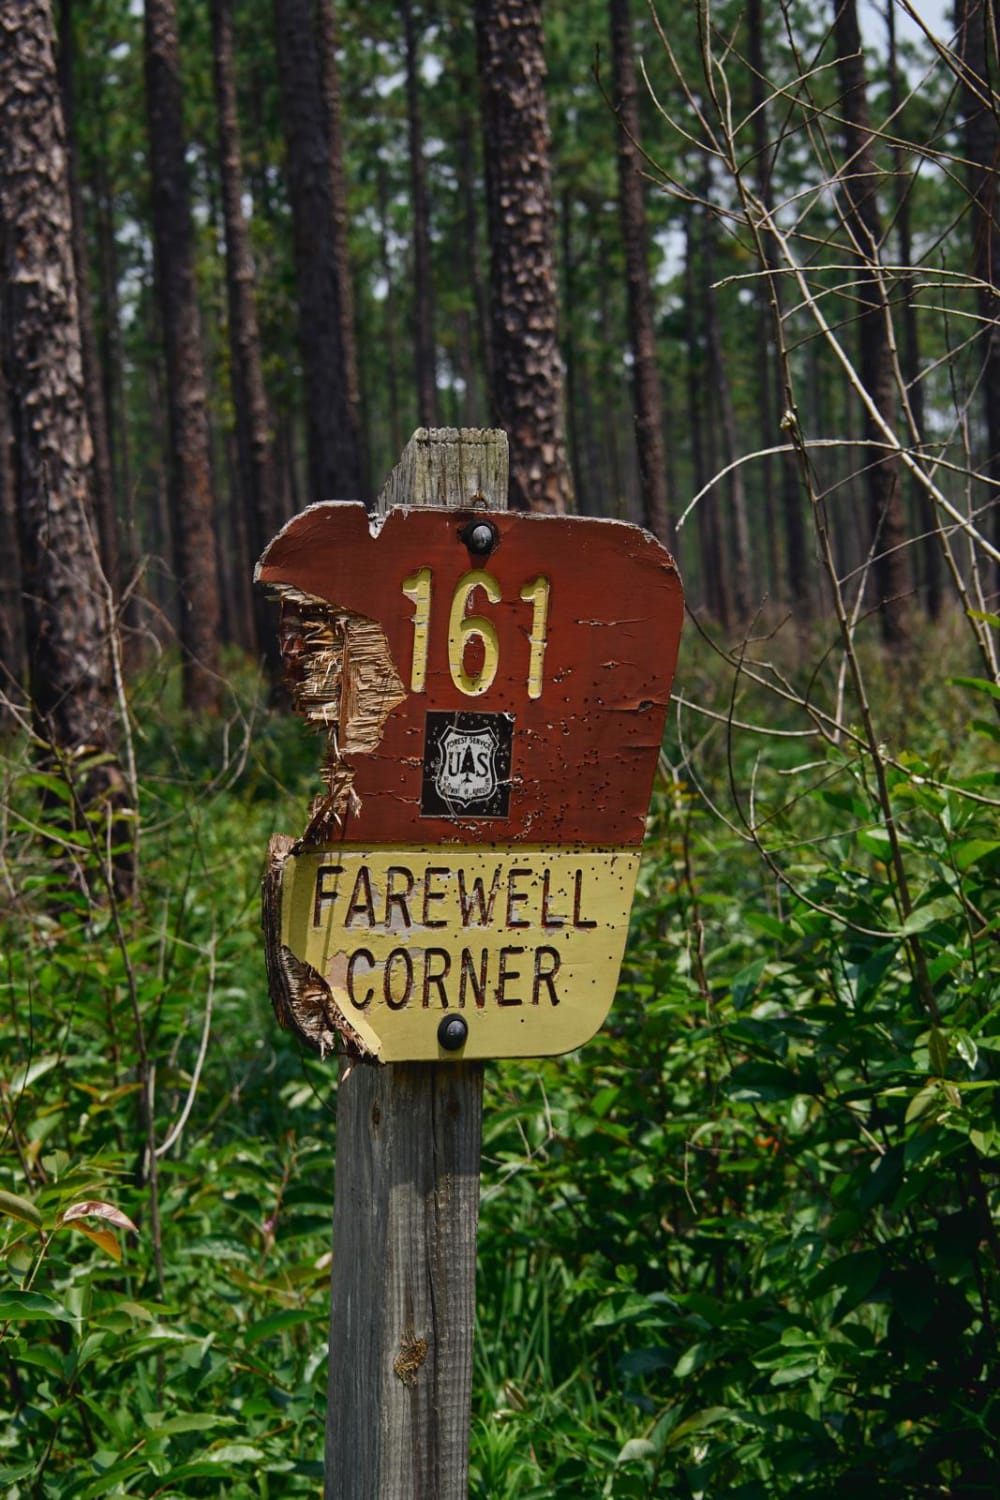 Farewell Corner - FSR 161